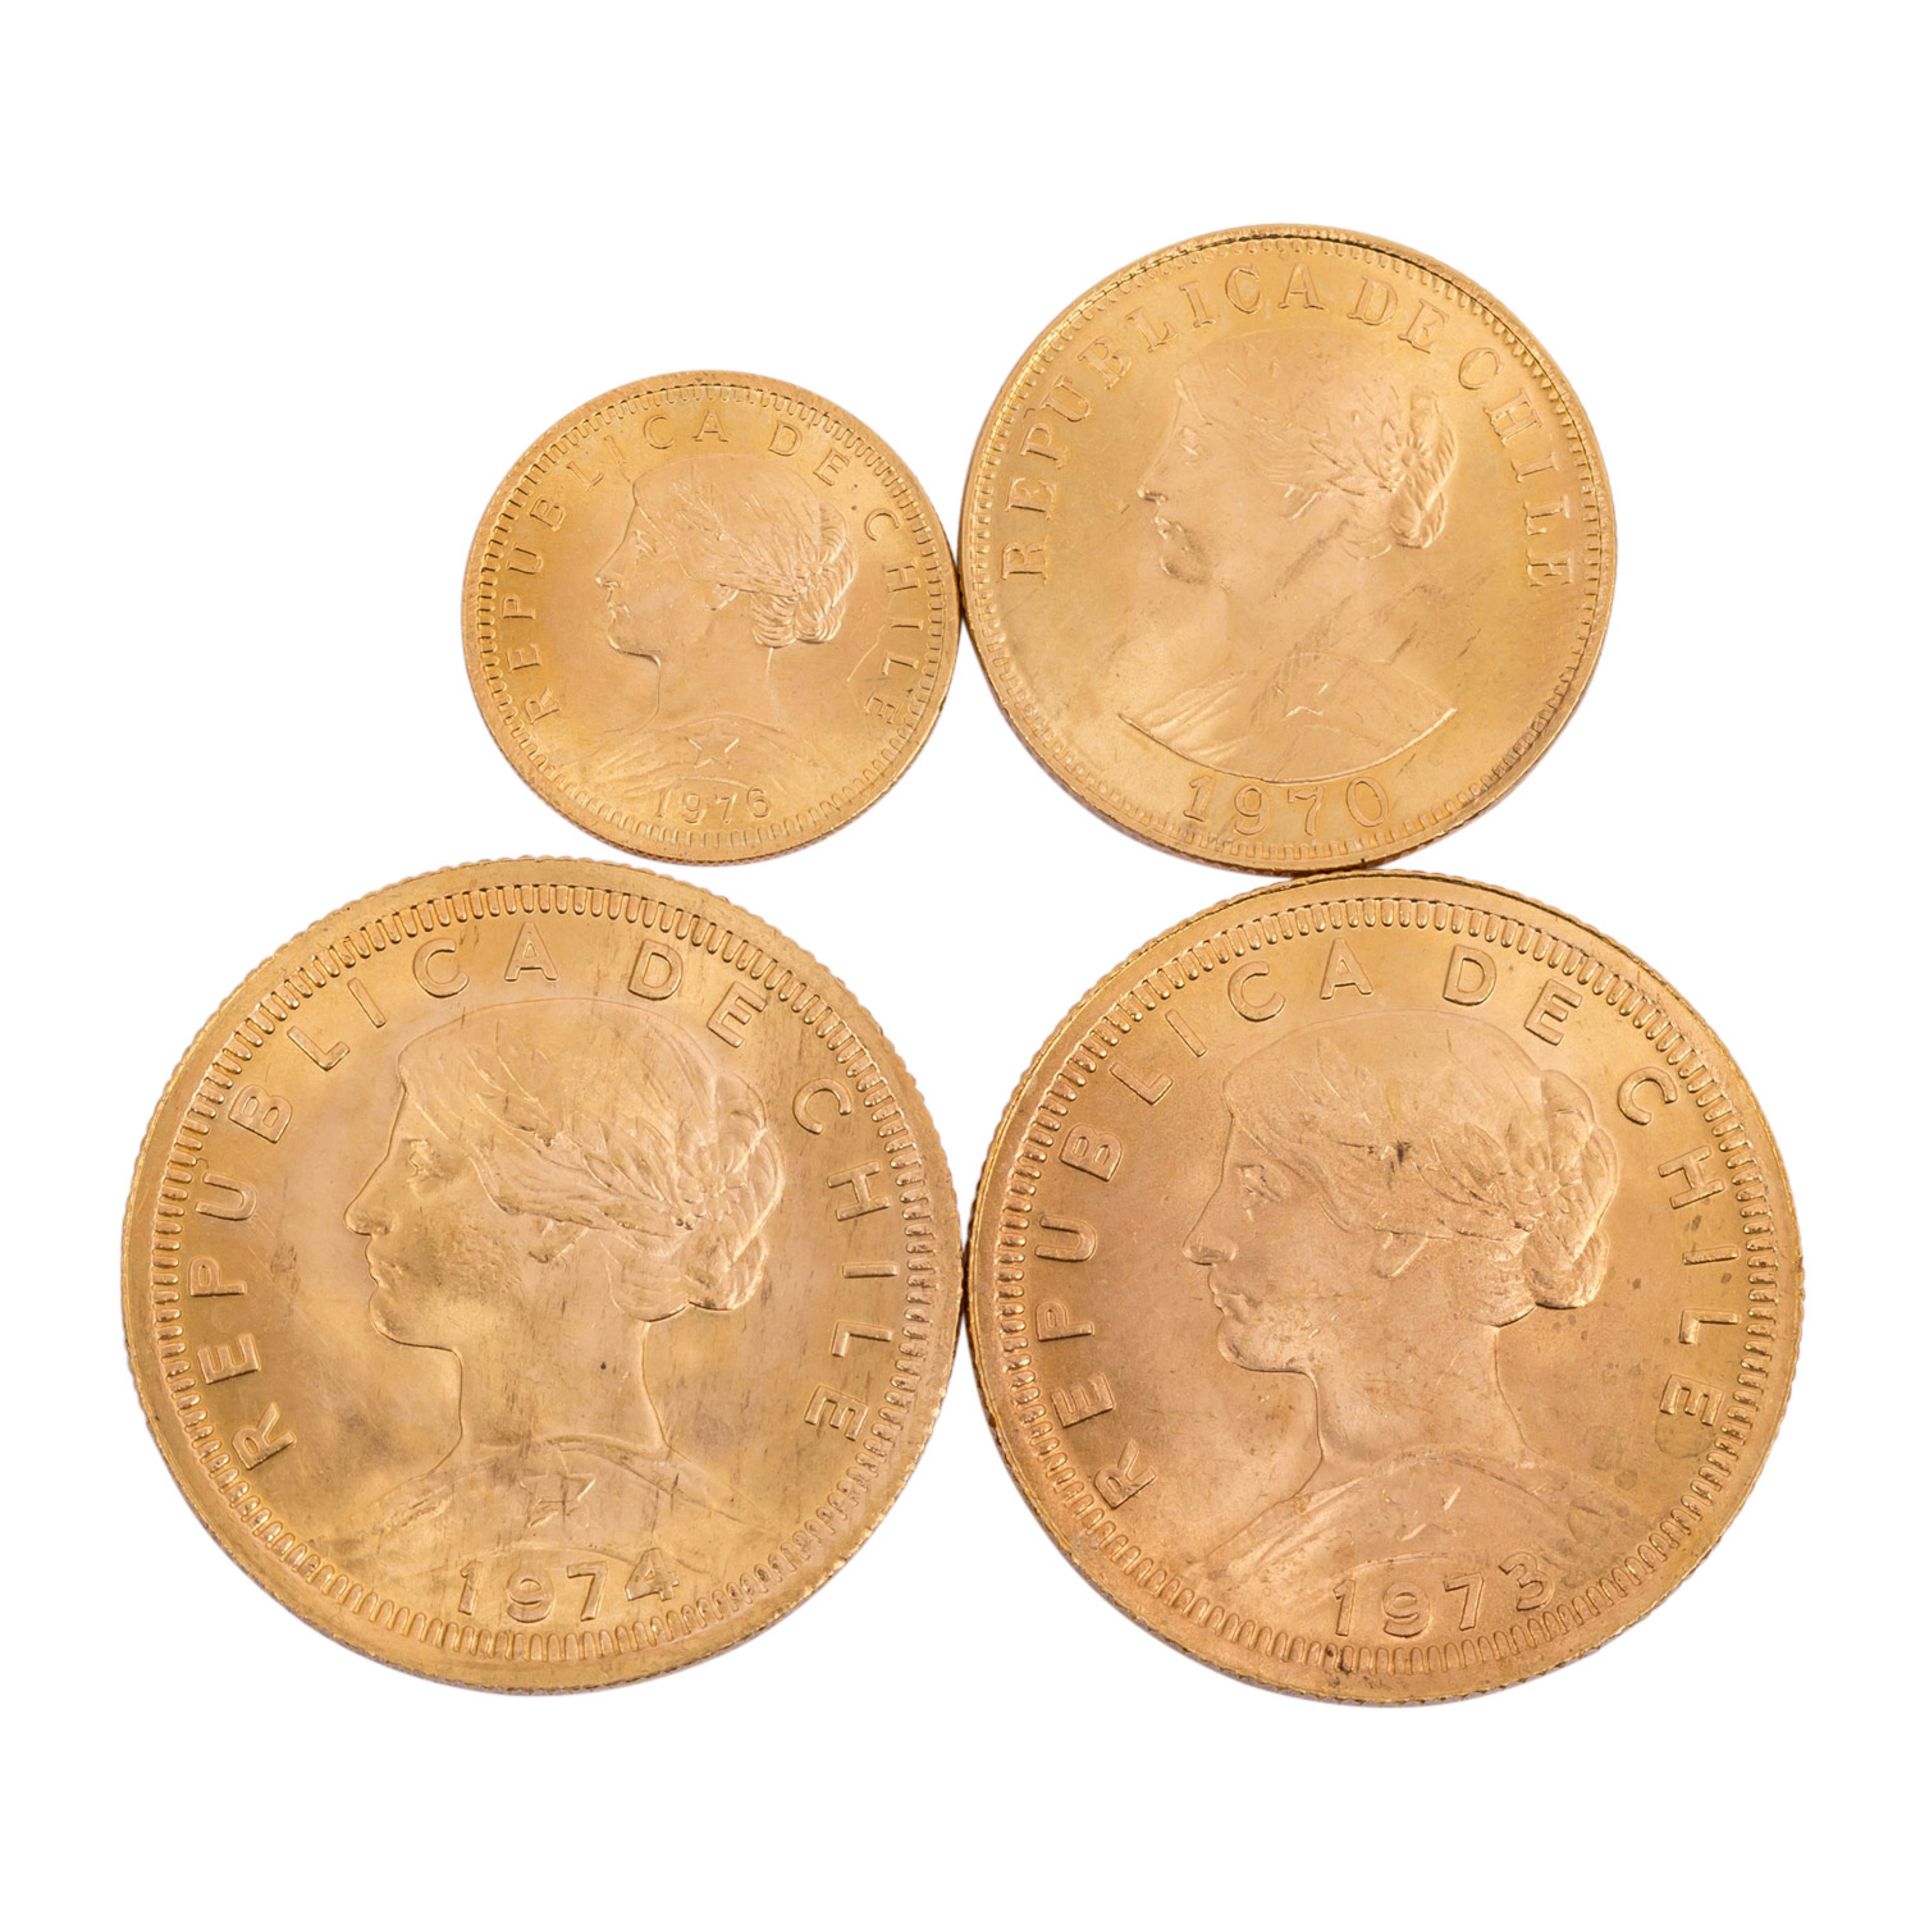 Chile/GOLD - Lot mit 2 x 100 Pesos 1973/74,50 Pesos 1970 sowie 20 Pesos 1976. Ca. 49 g fein,